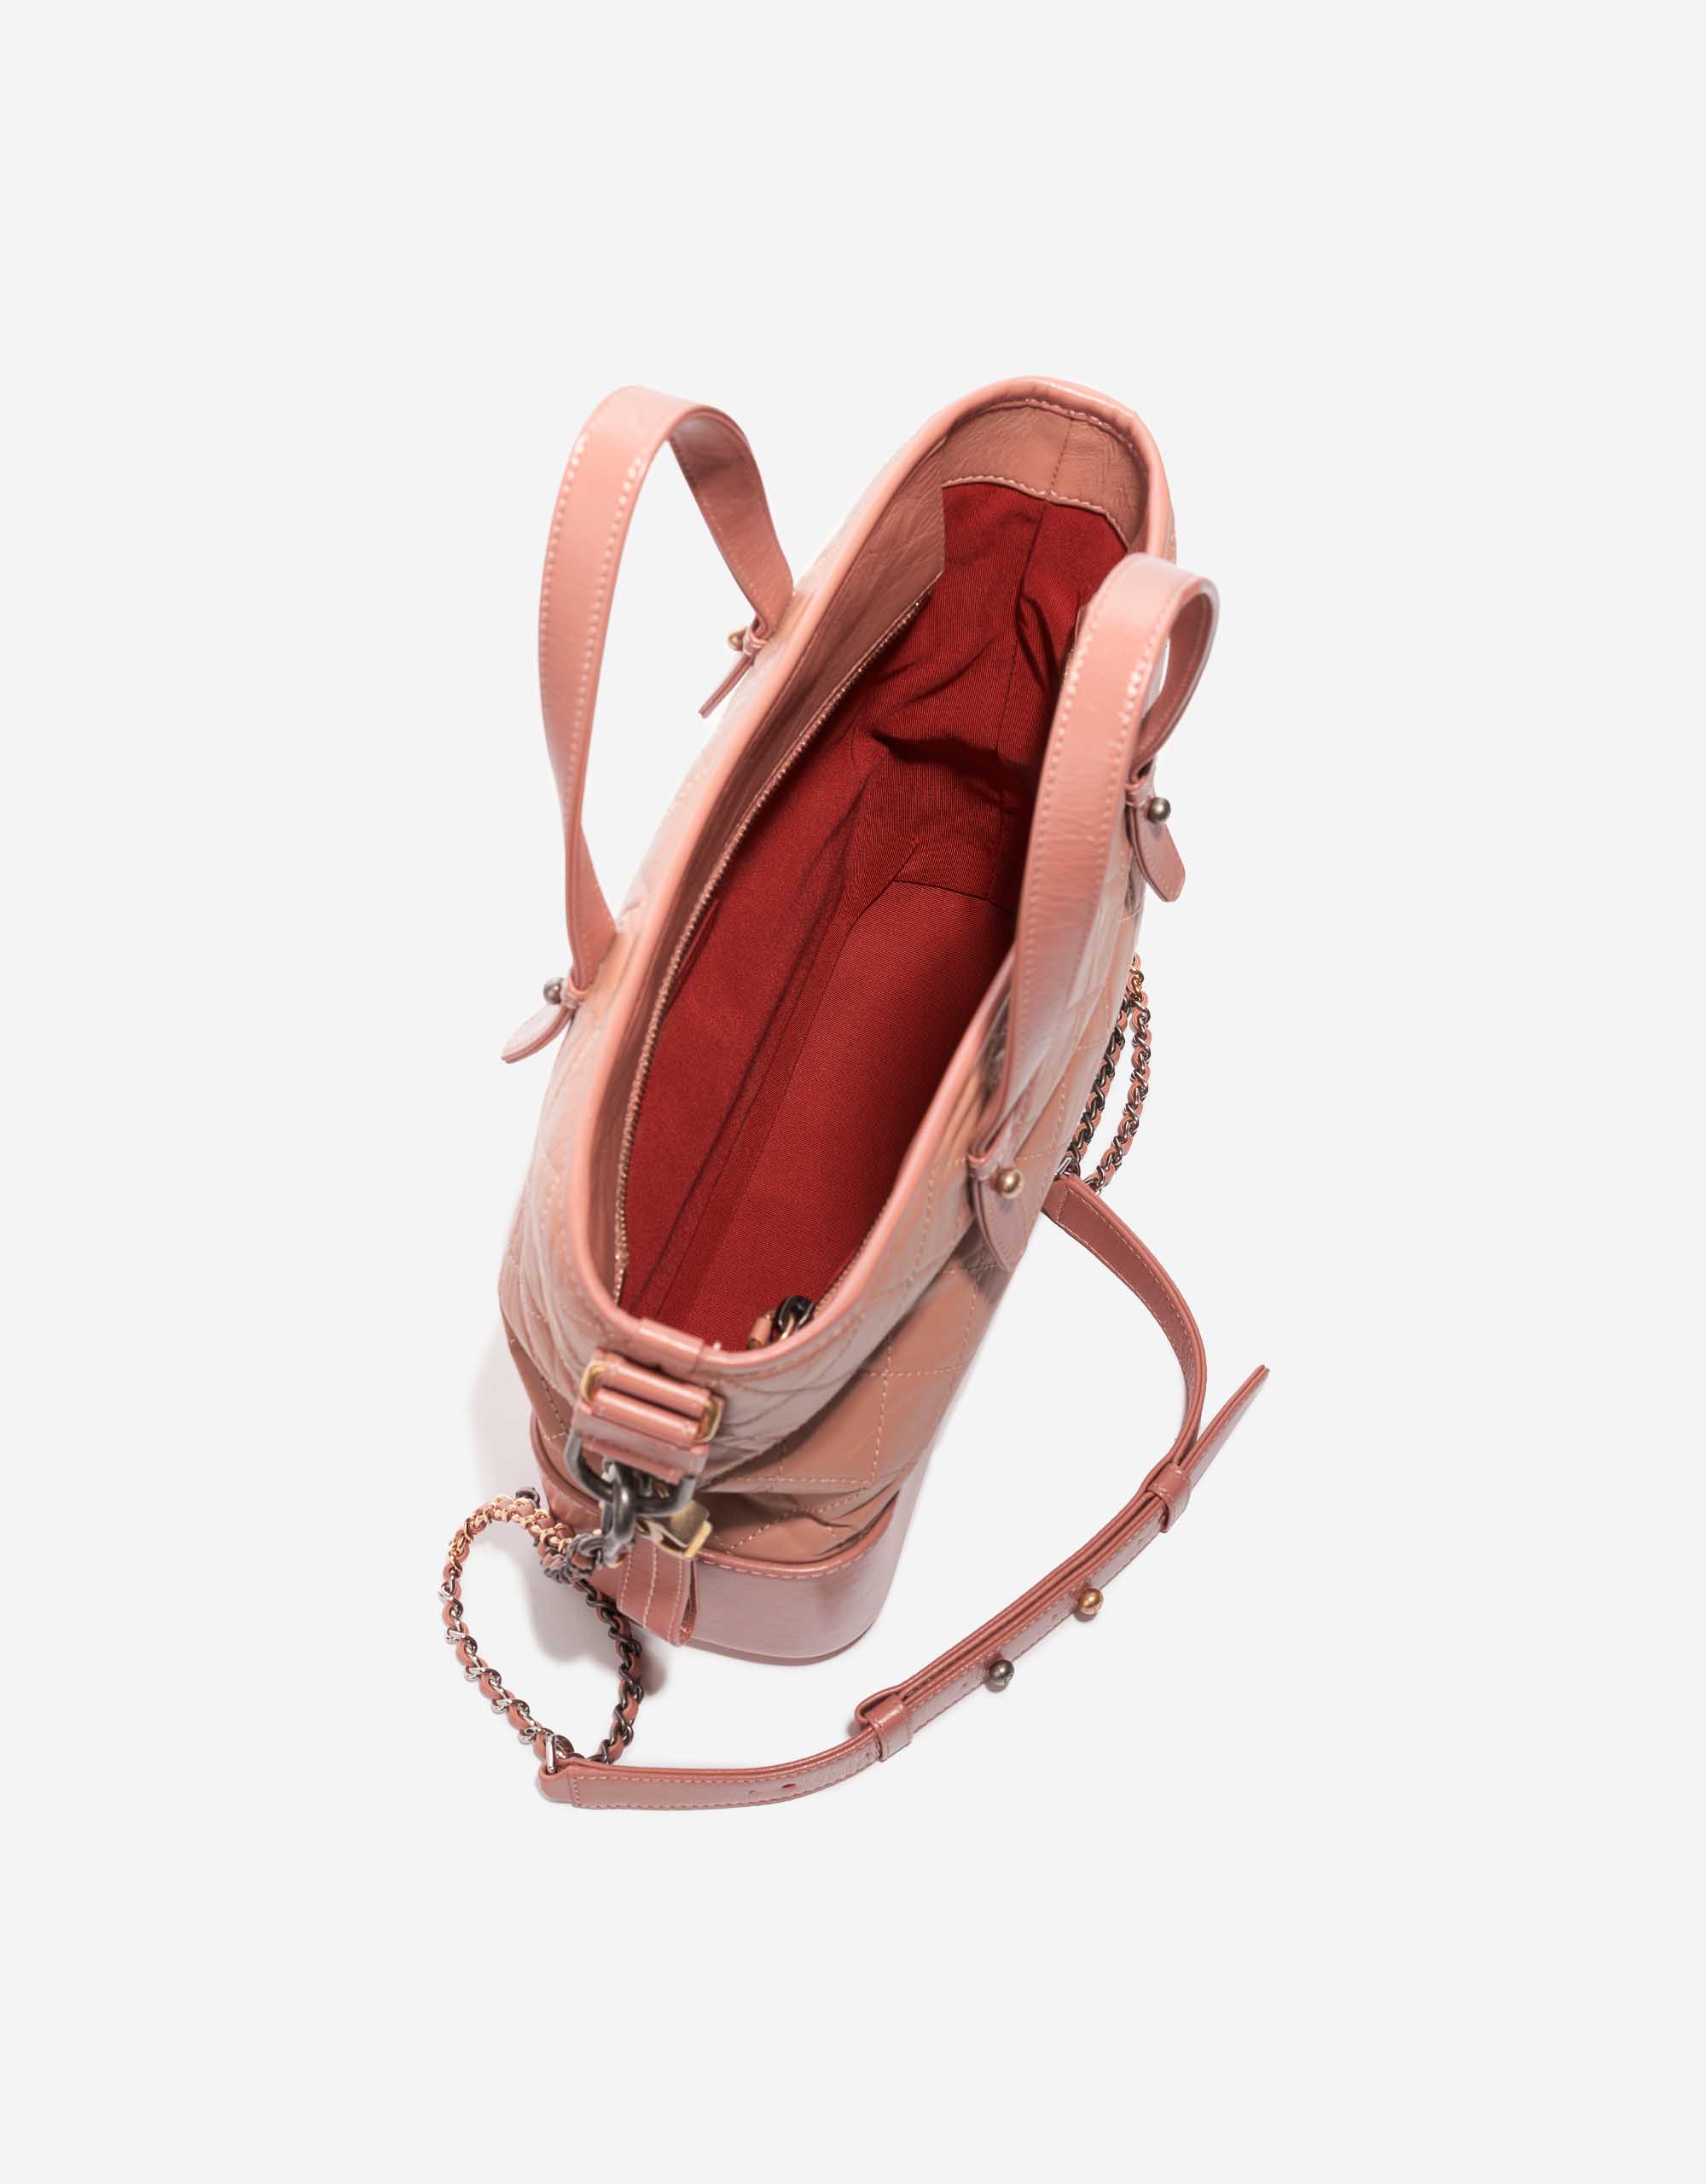 Pre-owned Chanel bag Gabrielle Handle Calf Beige / Dust Rose Beige, Rose Inside | Sell your designer bag on Saclab.com